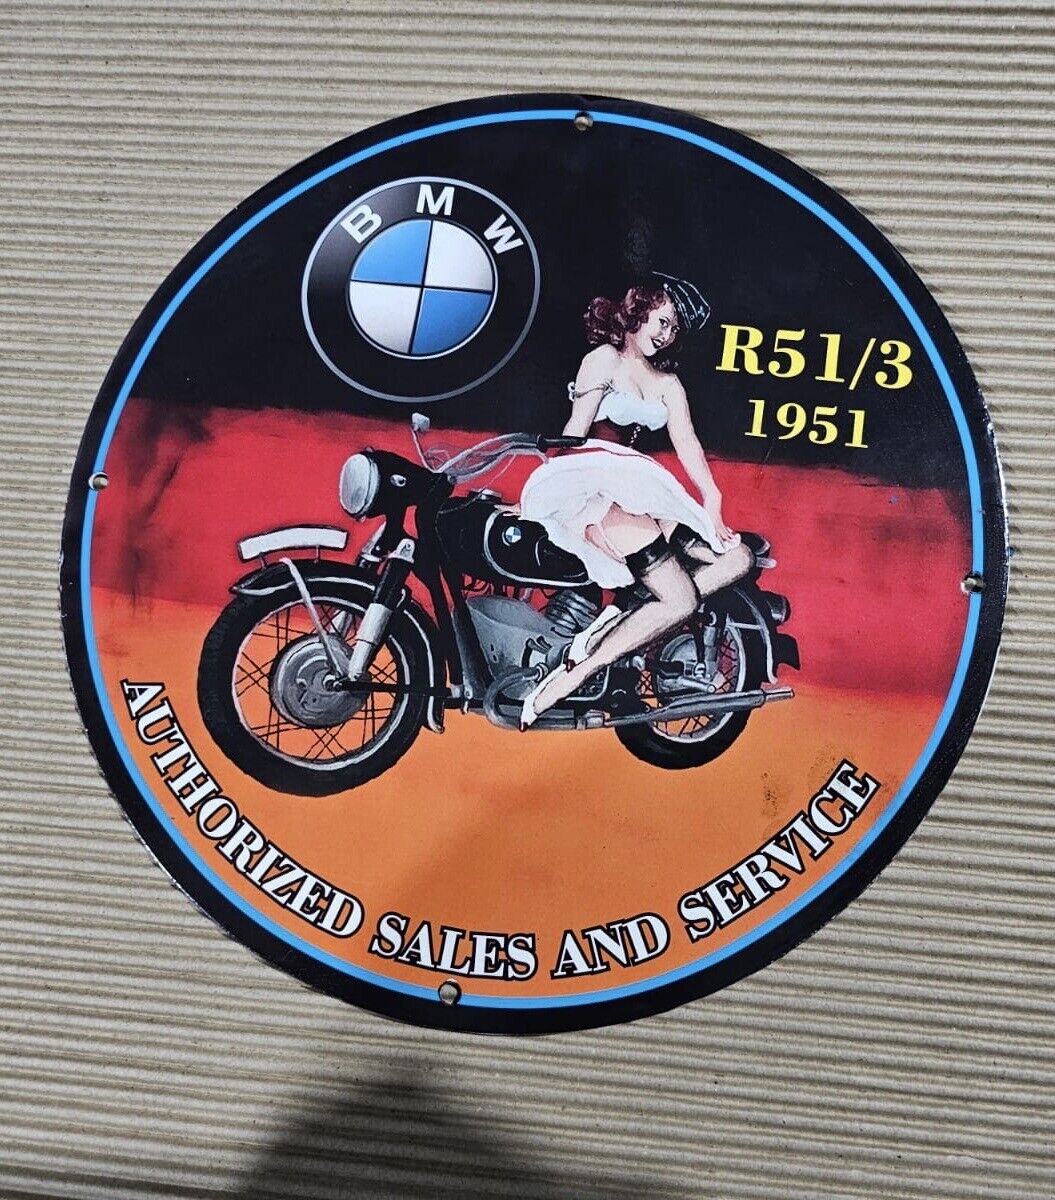 BMW R 51/3 AUTHORIZED SALES & SERVICES PINUP GIRL MANCAVE PORCELAIN ENAMEL SIGN